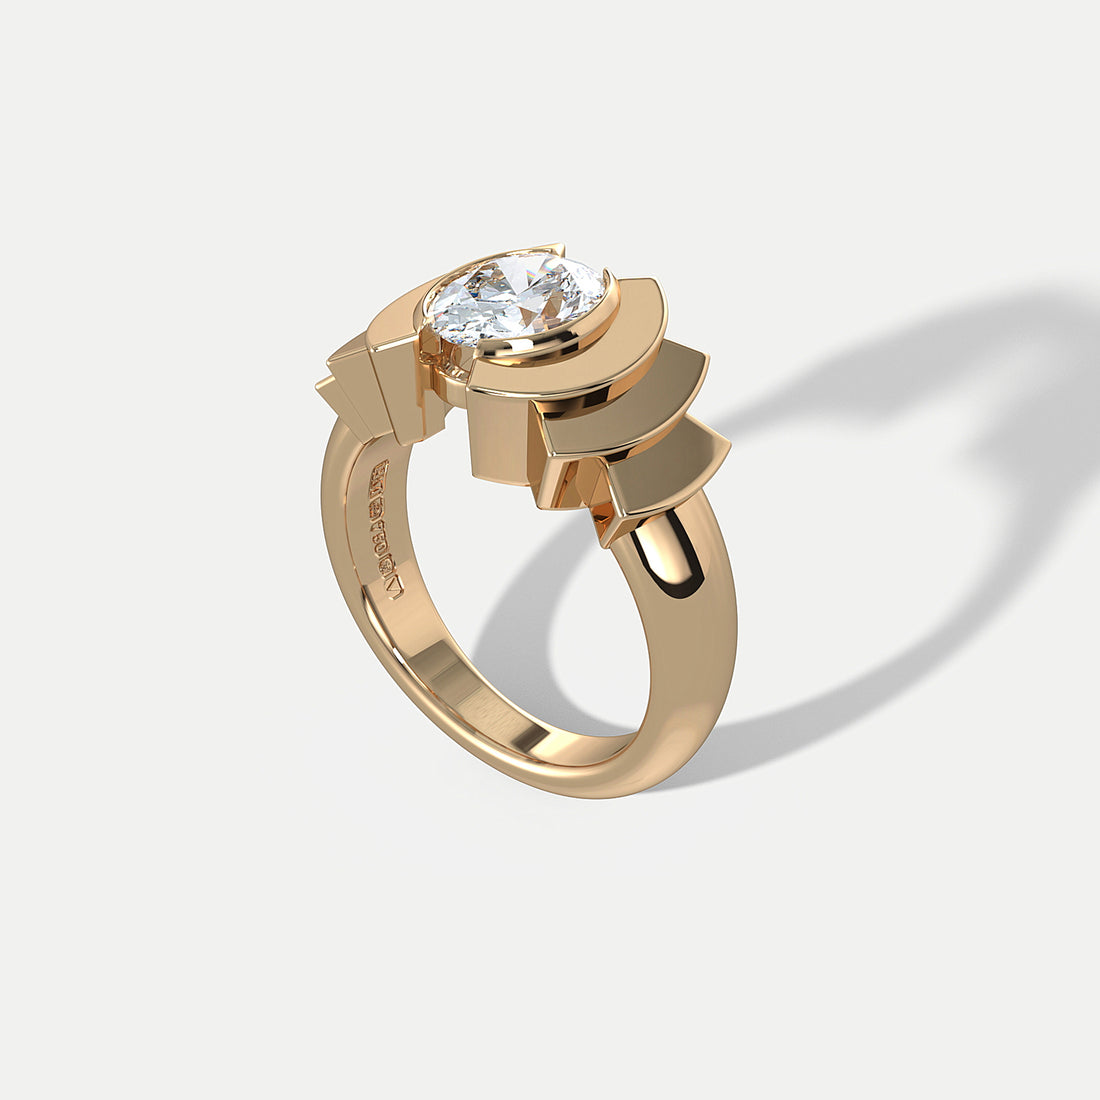  Oval Diamond Beat Gold Ring by Hannah Martin | The Cut London